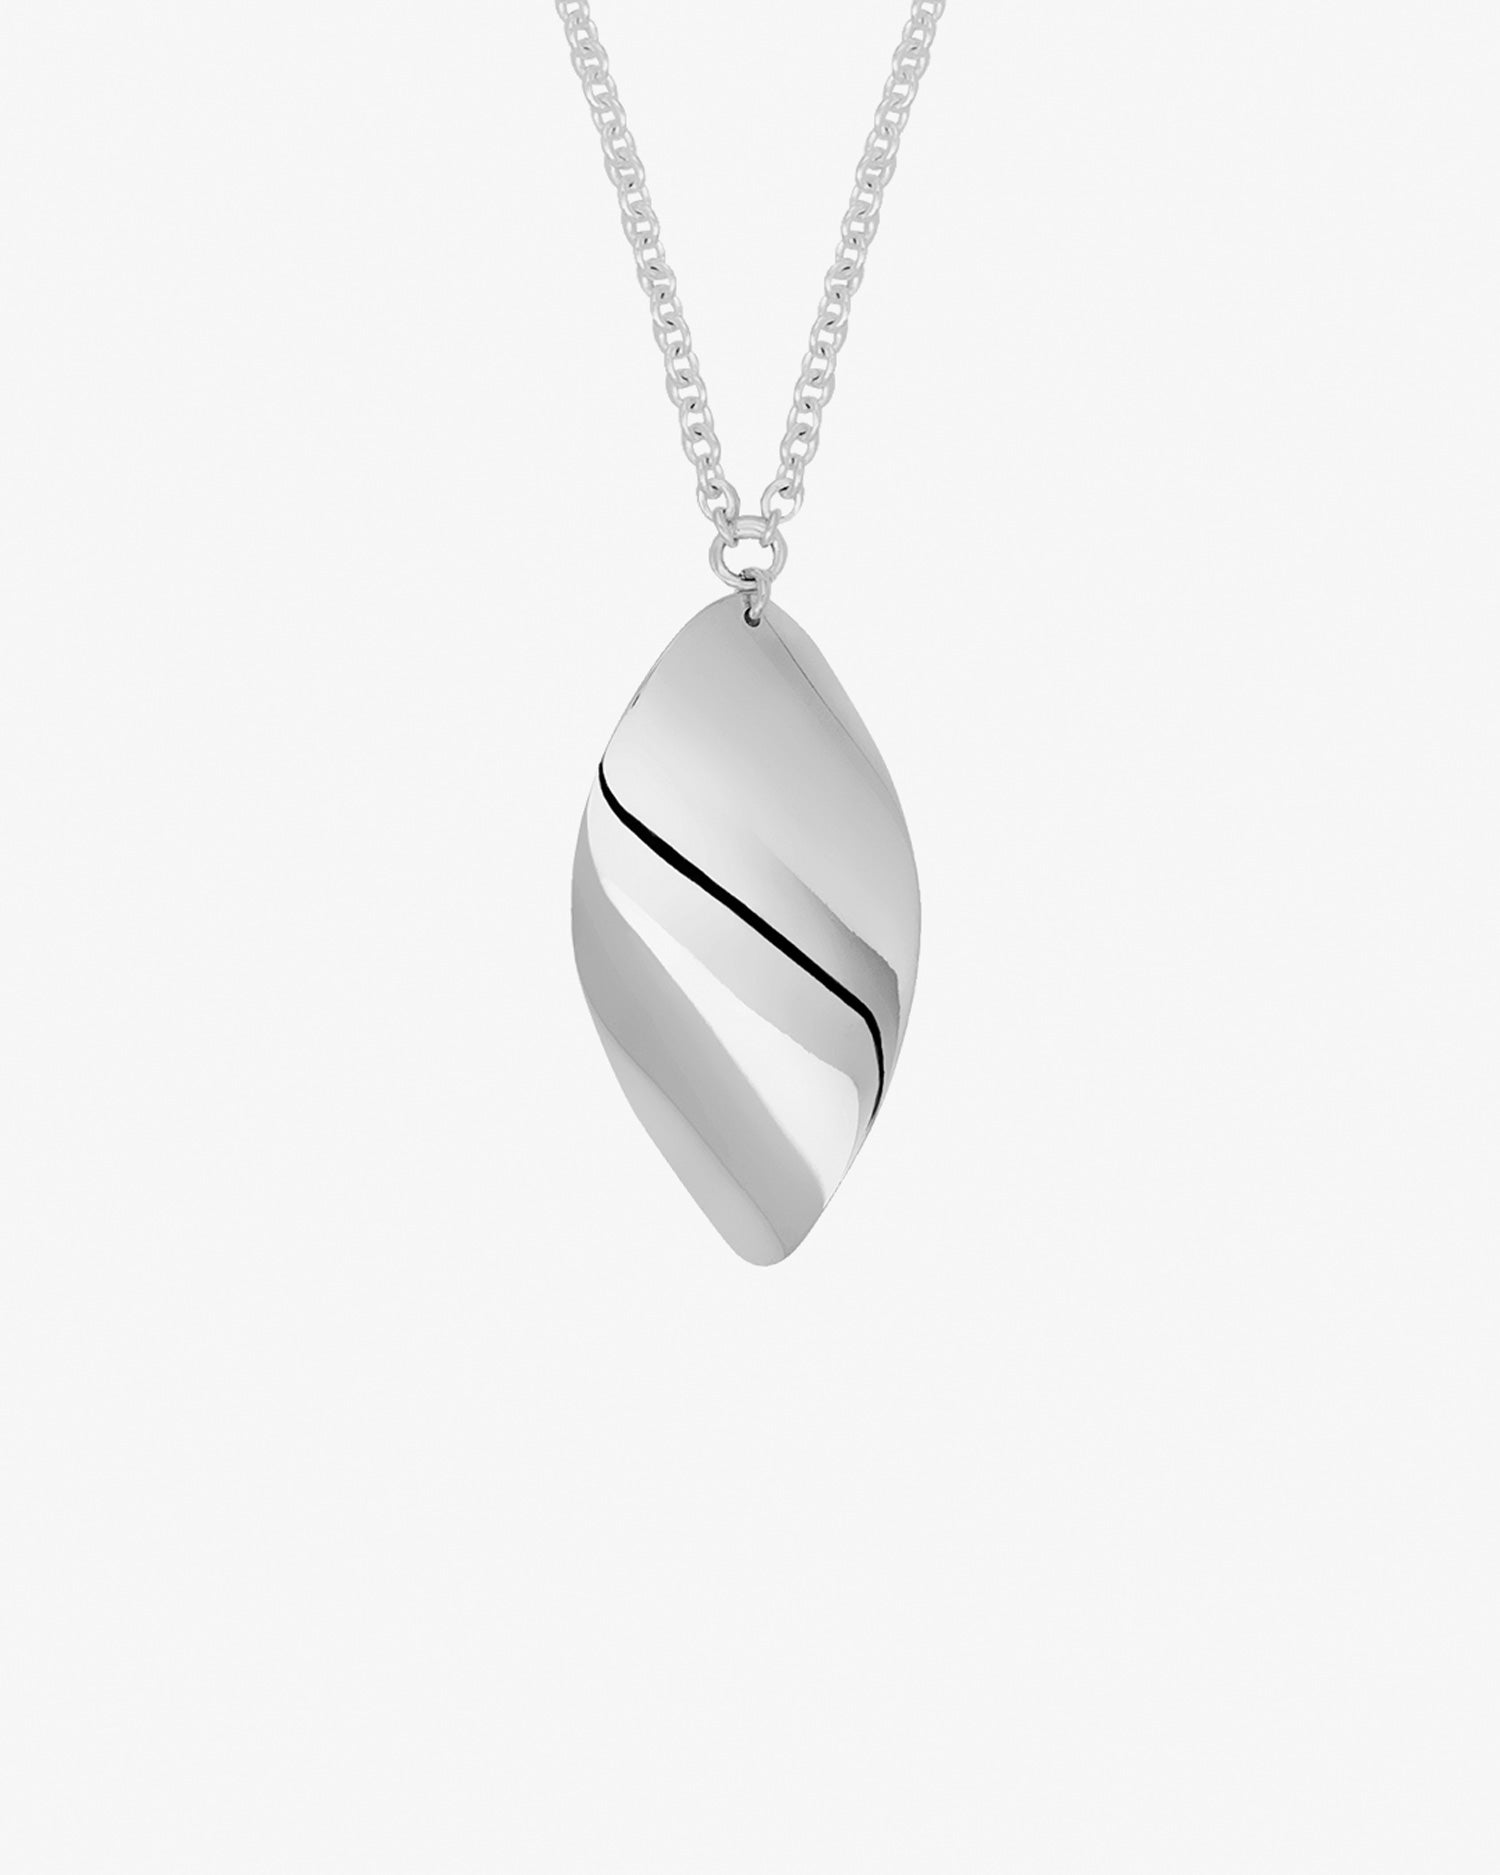 Aqua-single-necklace-02